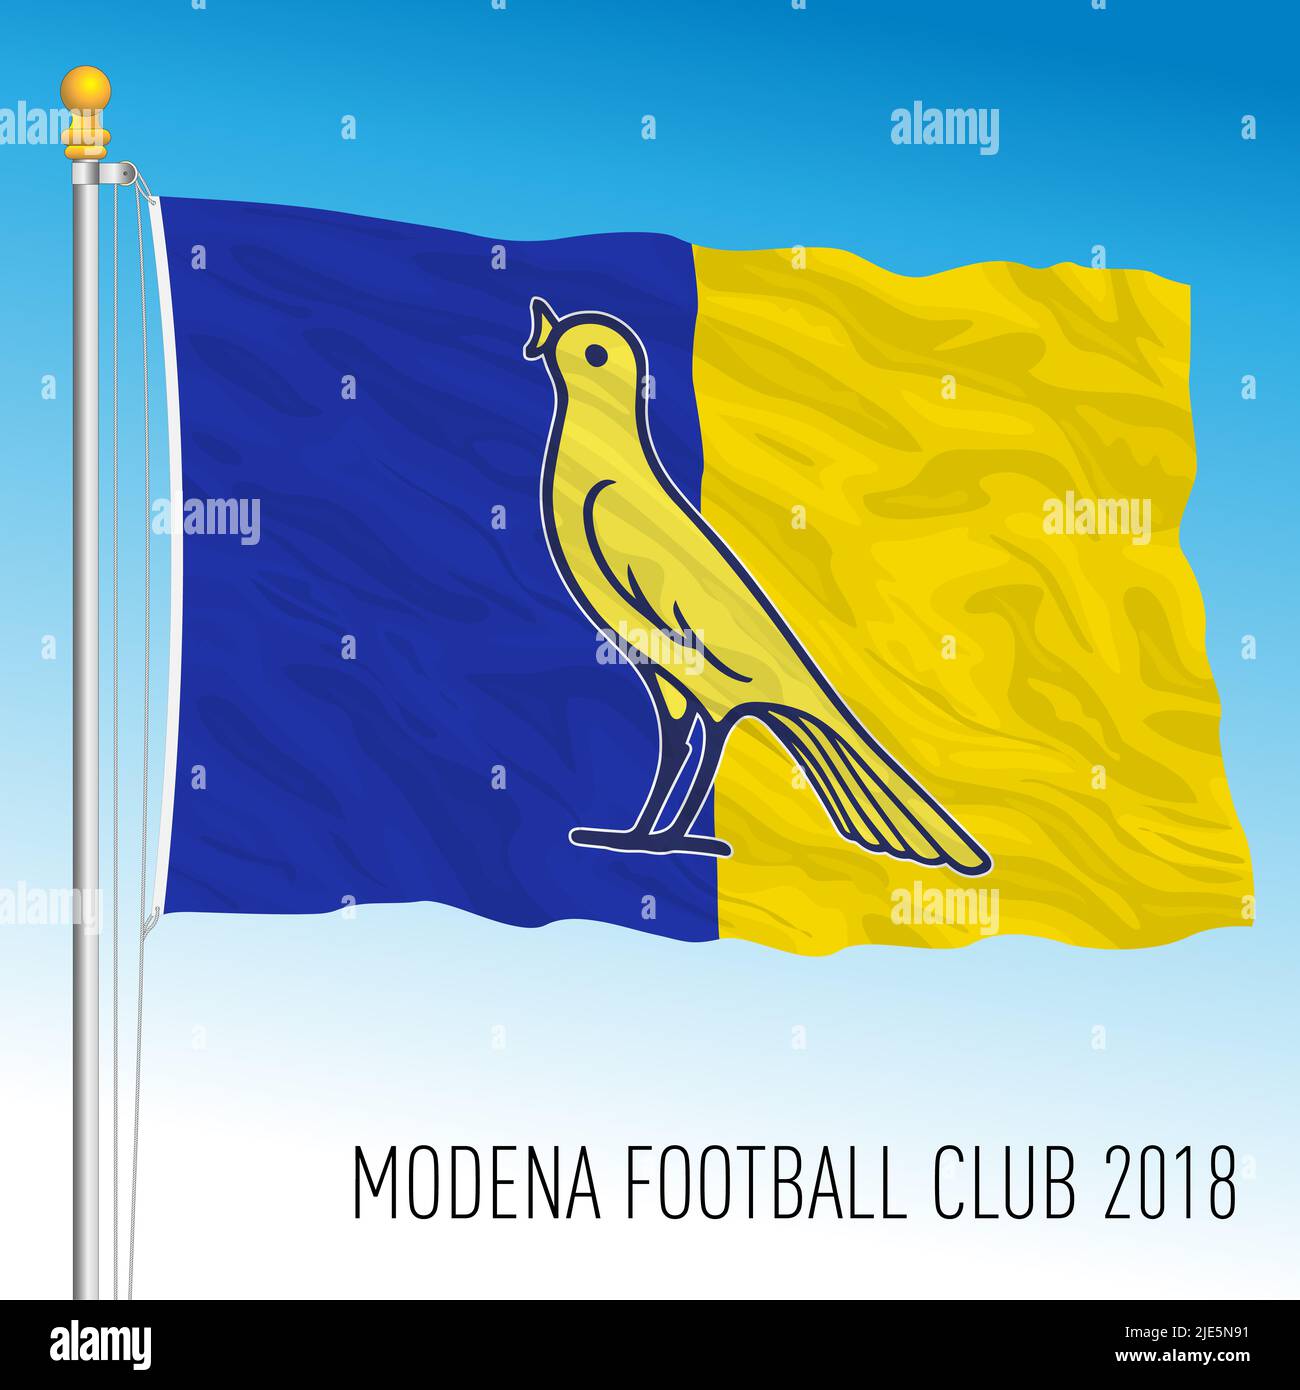 Modena FC 2018 :: Itália :: Perfil da Equipe 